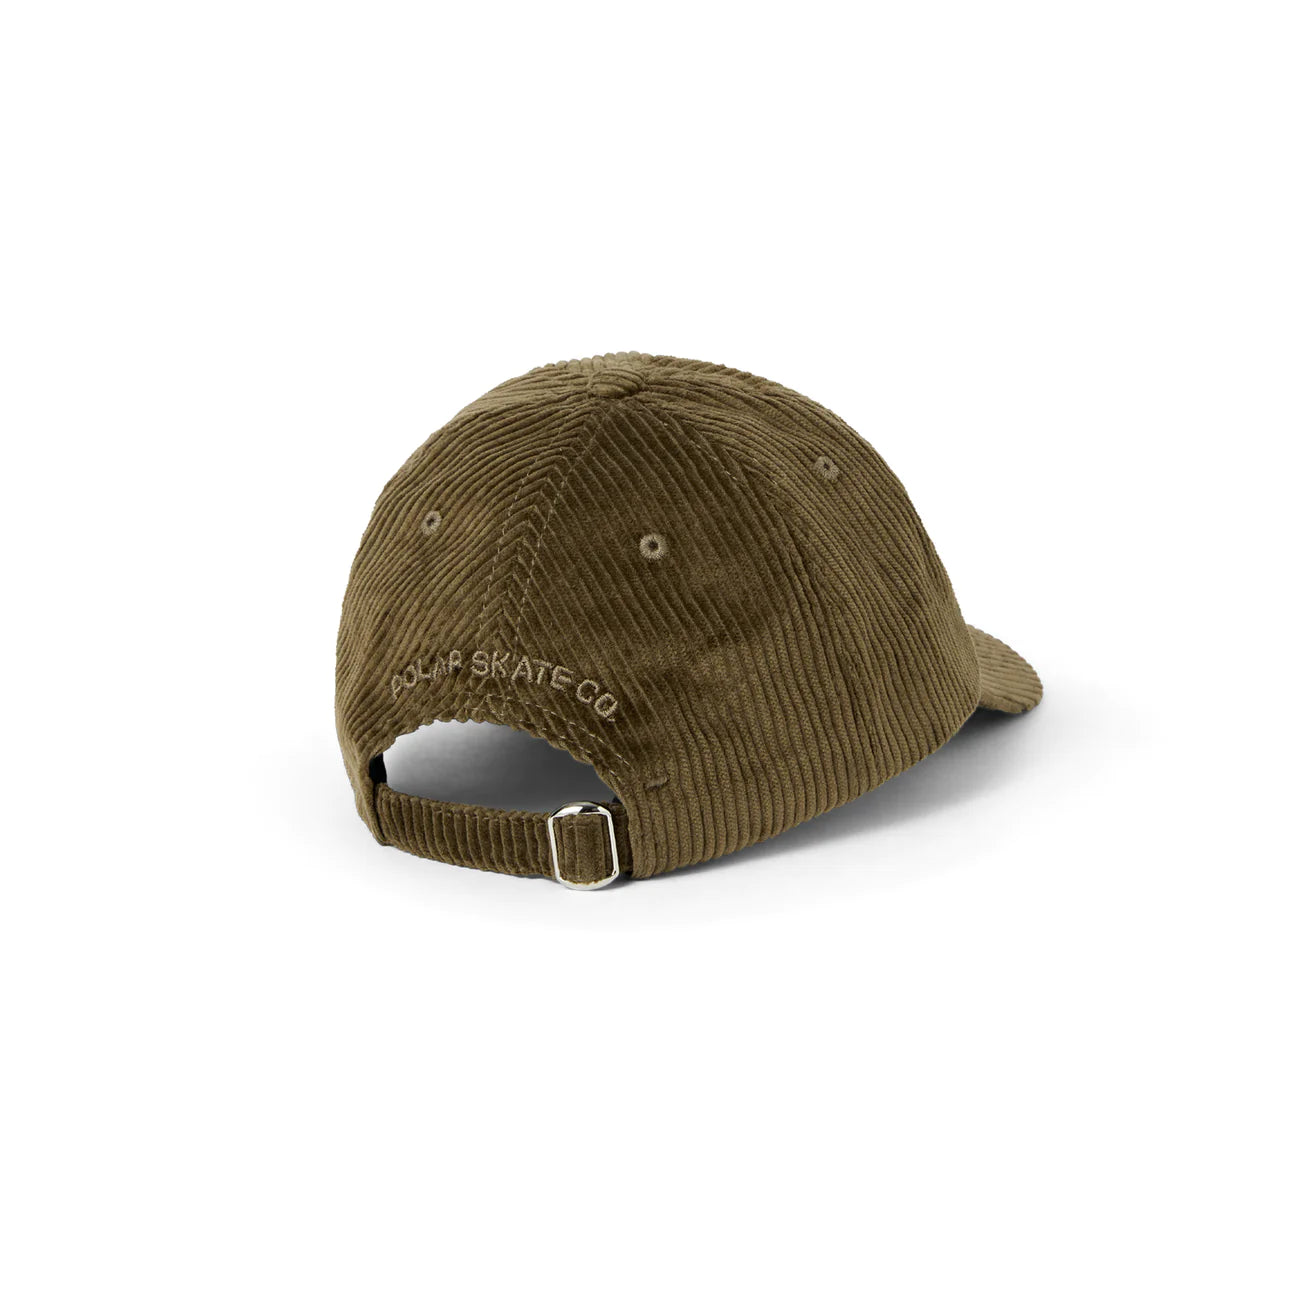 Sam Cap Corduroy Adjustable Buckleback Hat (beech brwn) (size options listed)